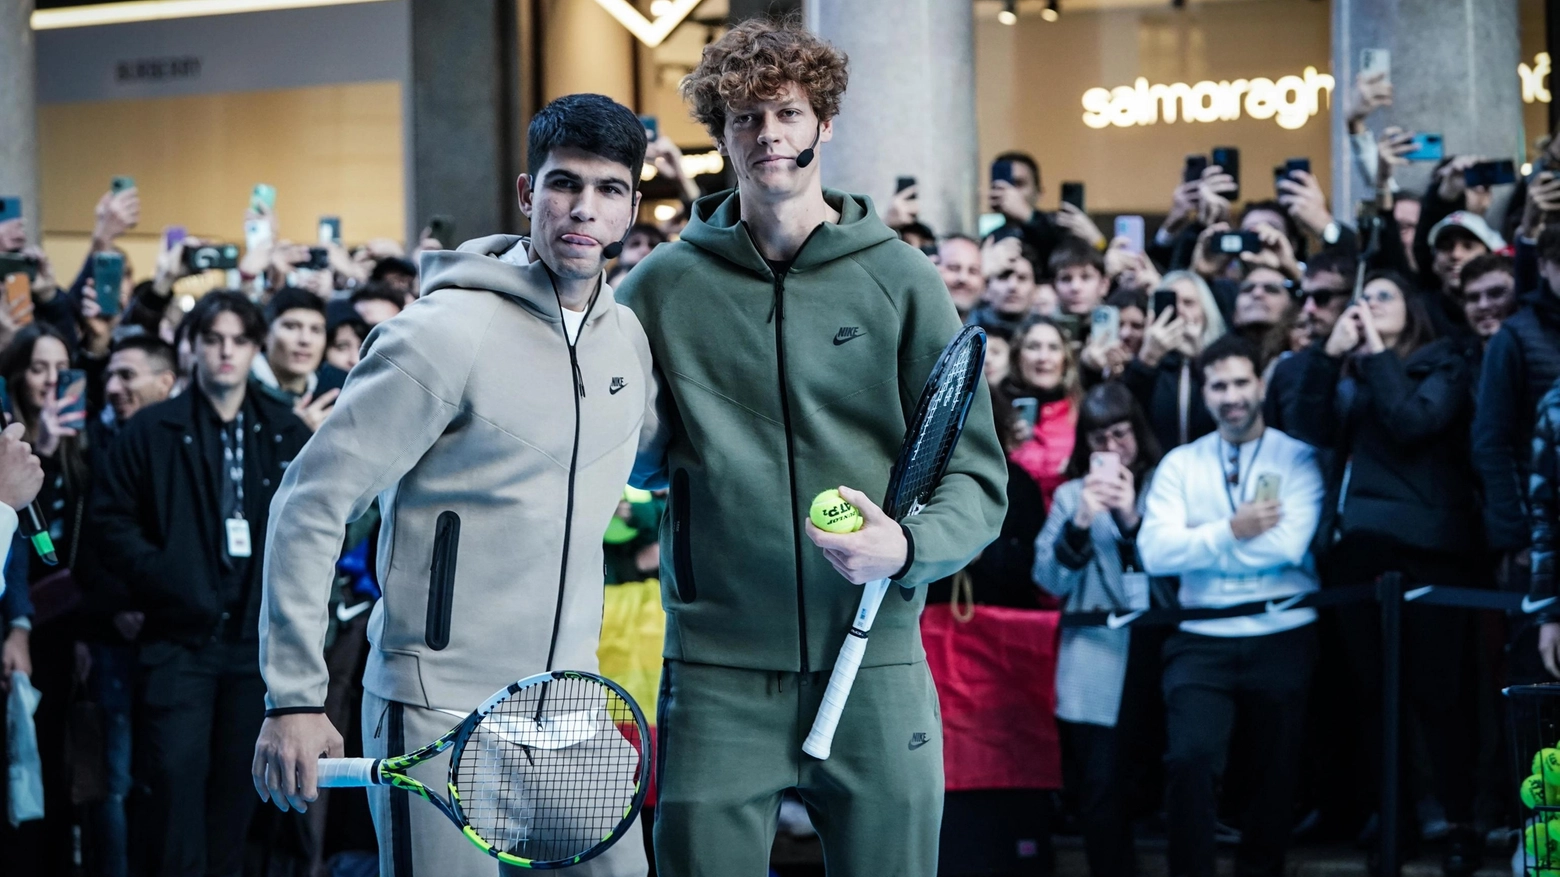 L'esibizione di Jannik Sinner e Carlos Alcaraz per Atp tennis al Nike Store in via Roma a Torino